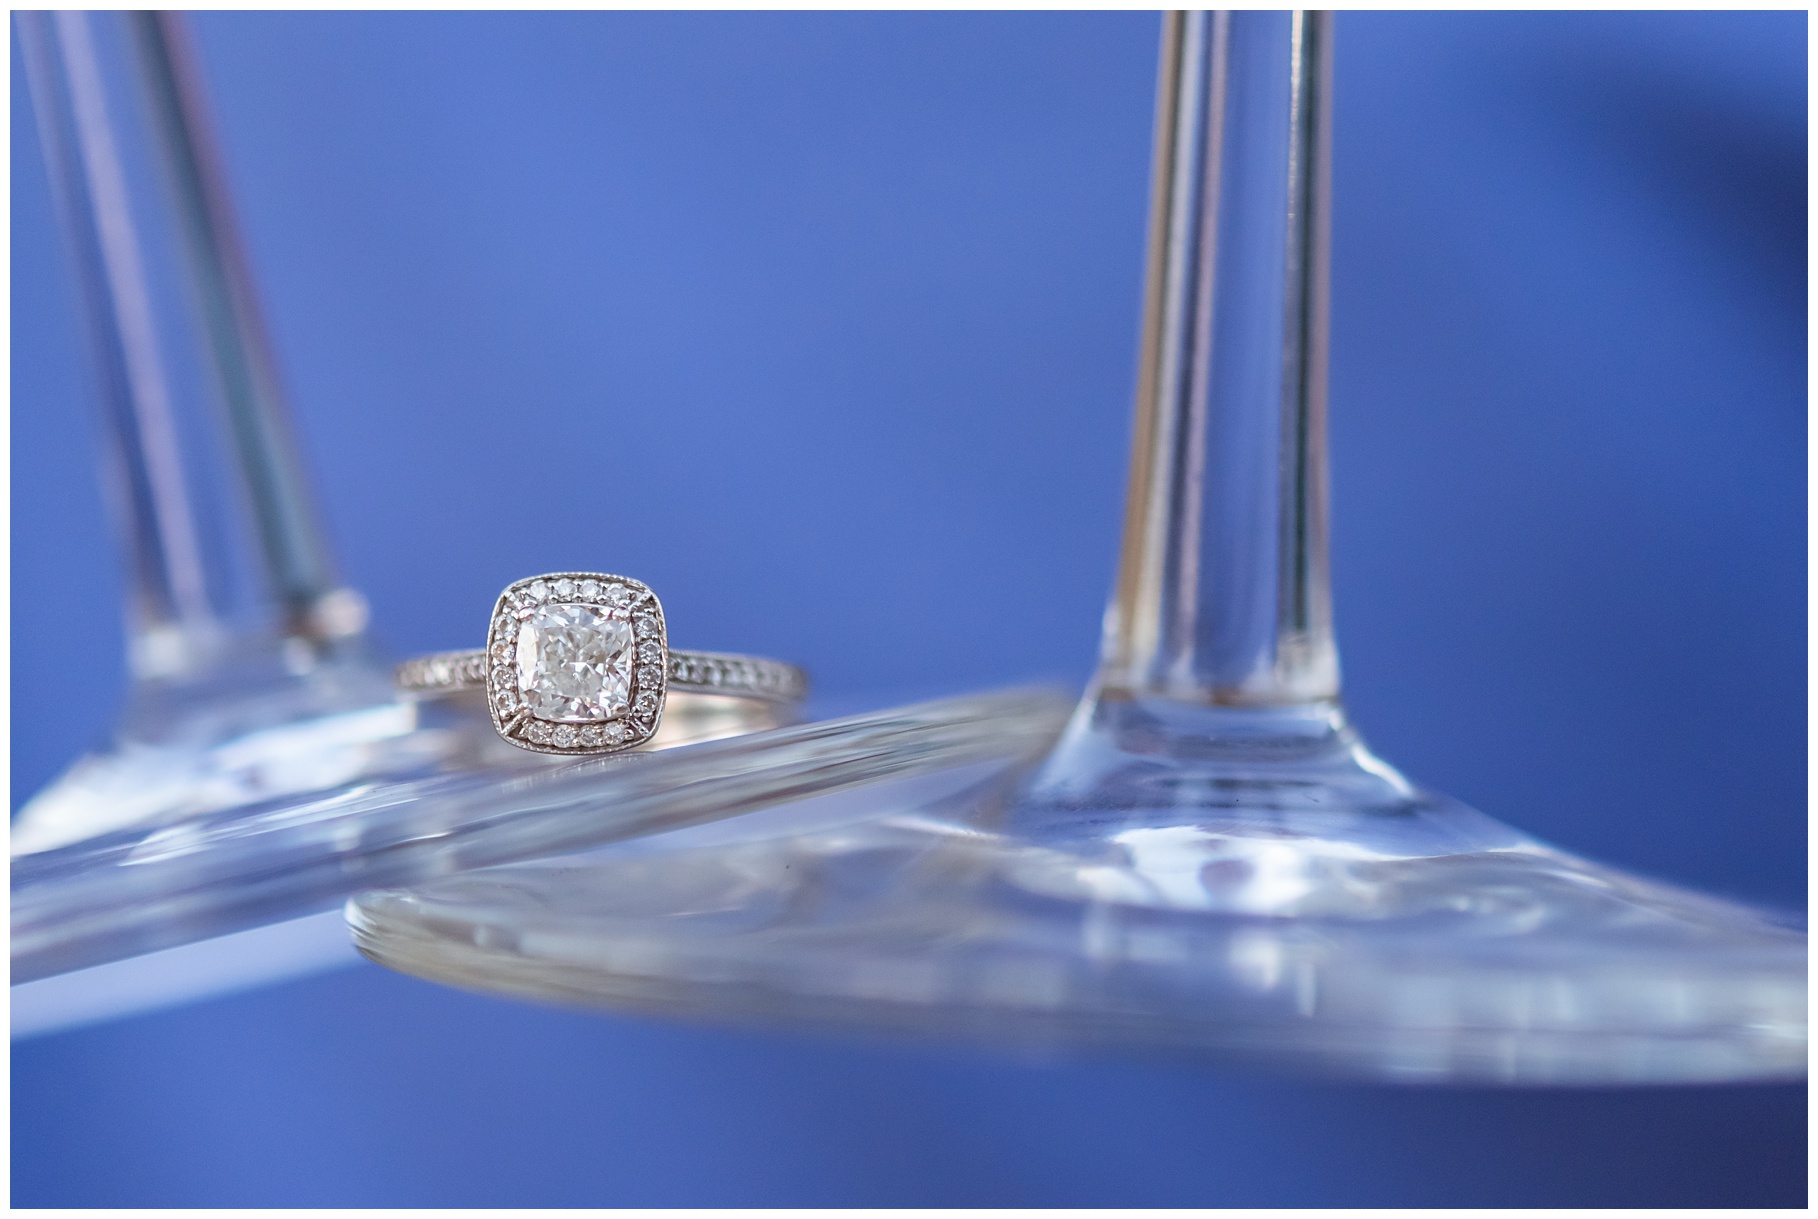 Engagement ring resting on wine glasses